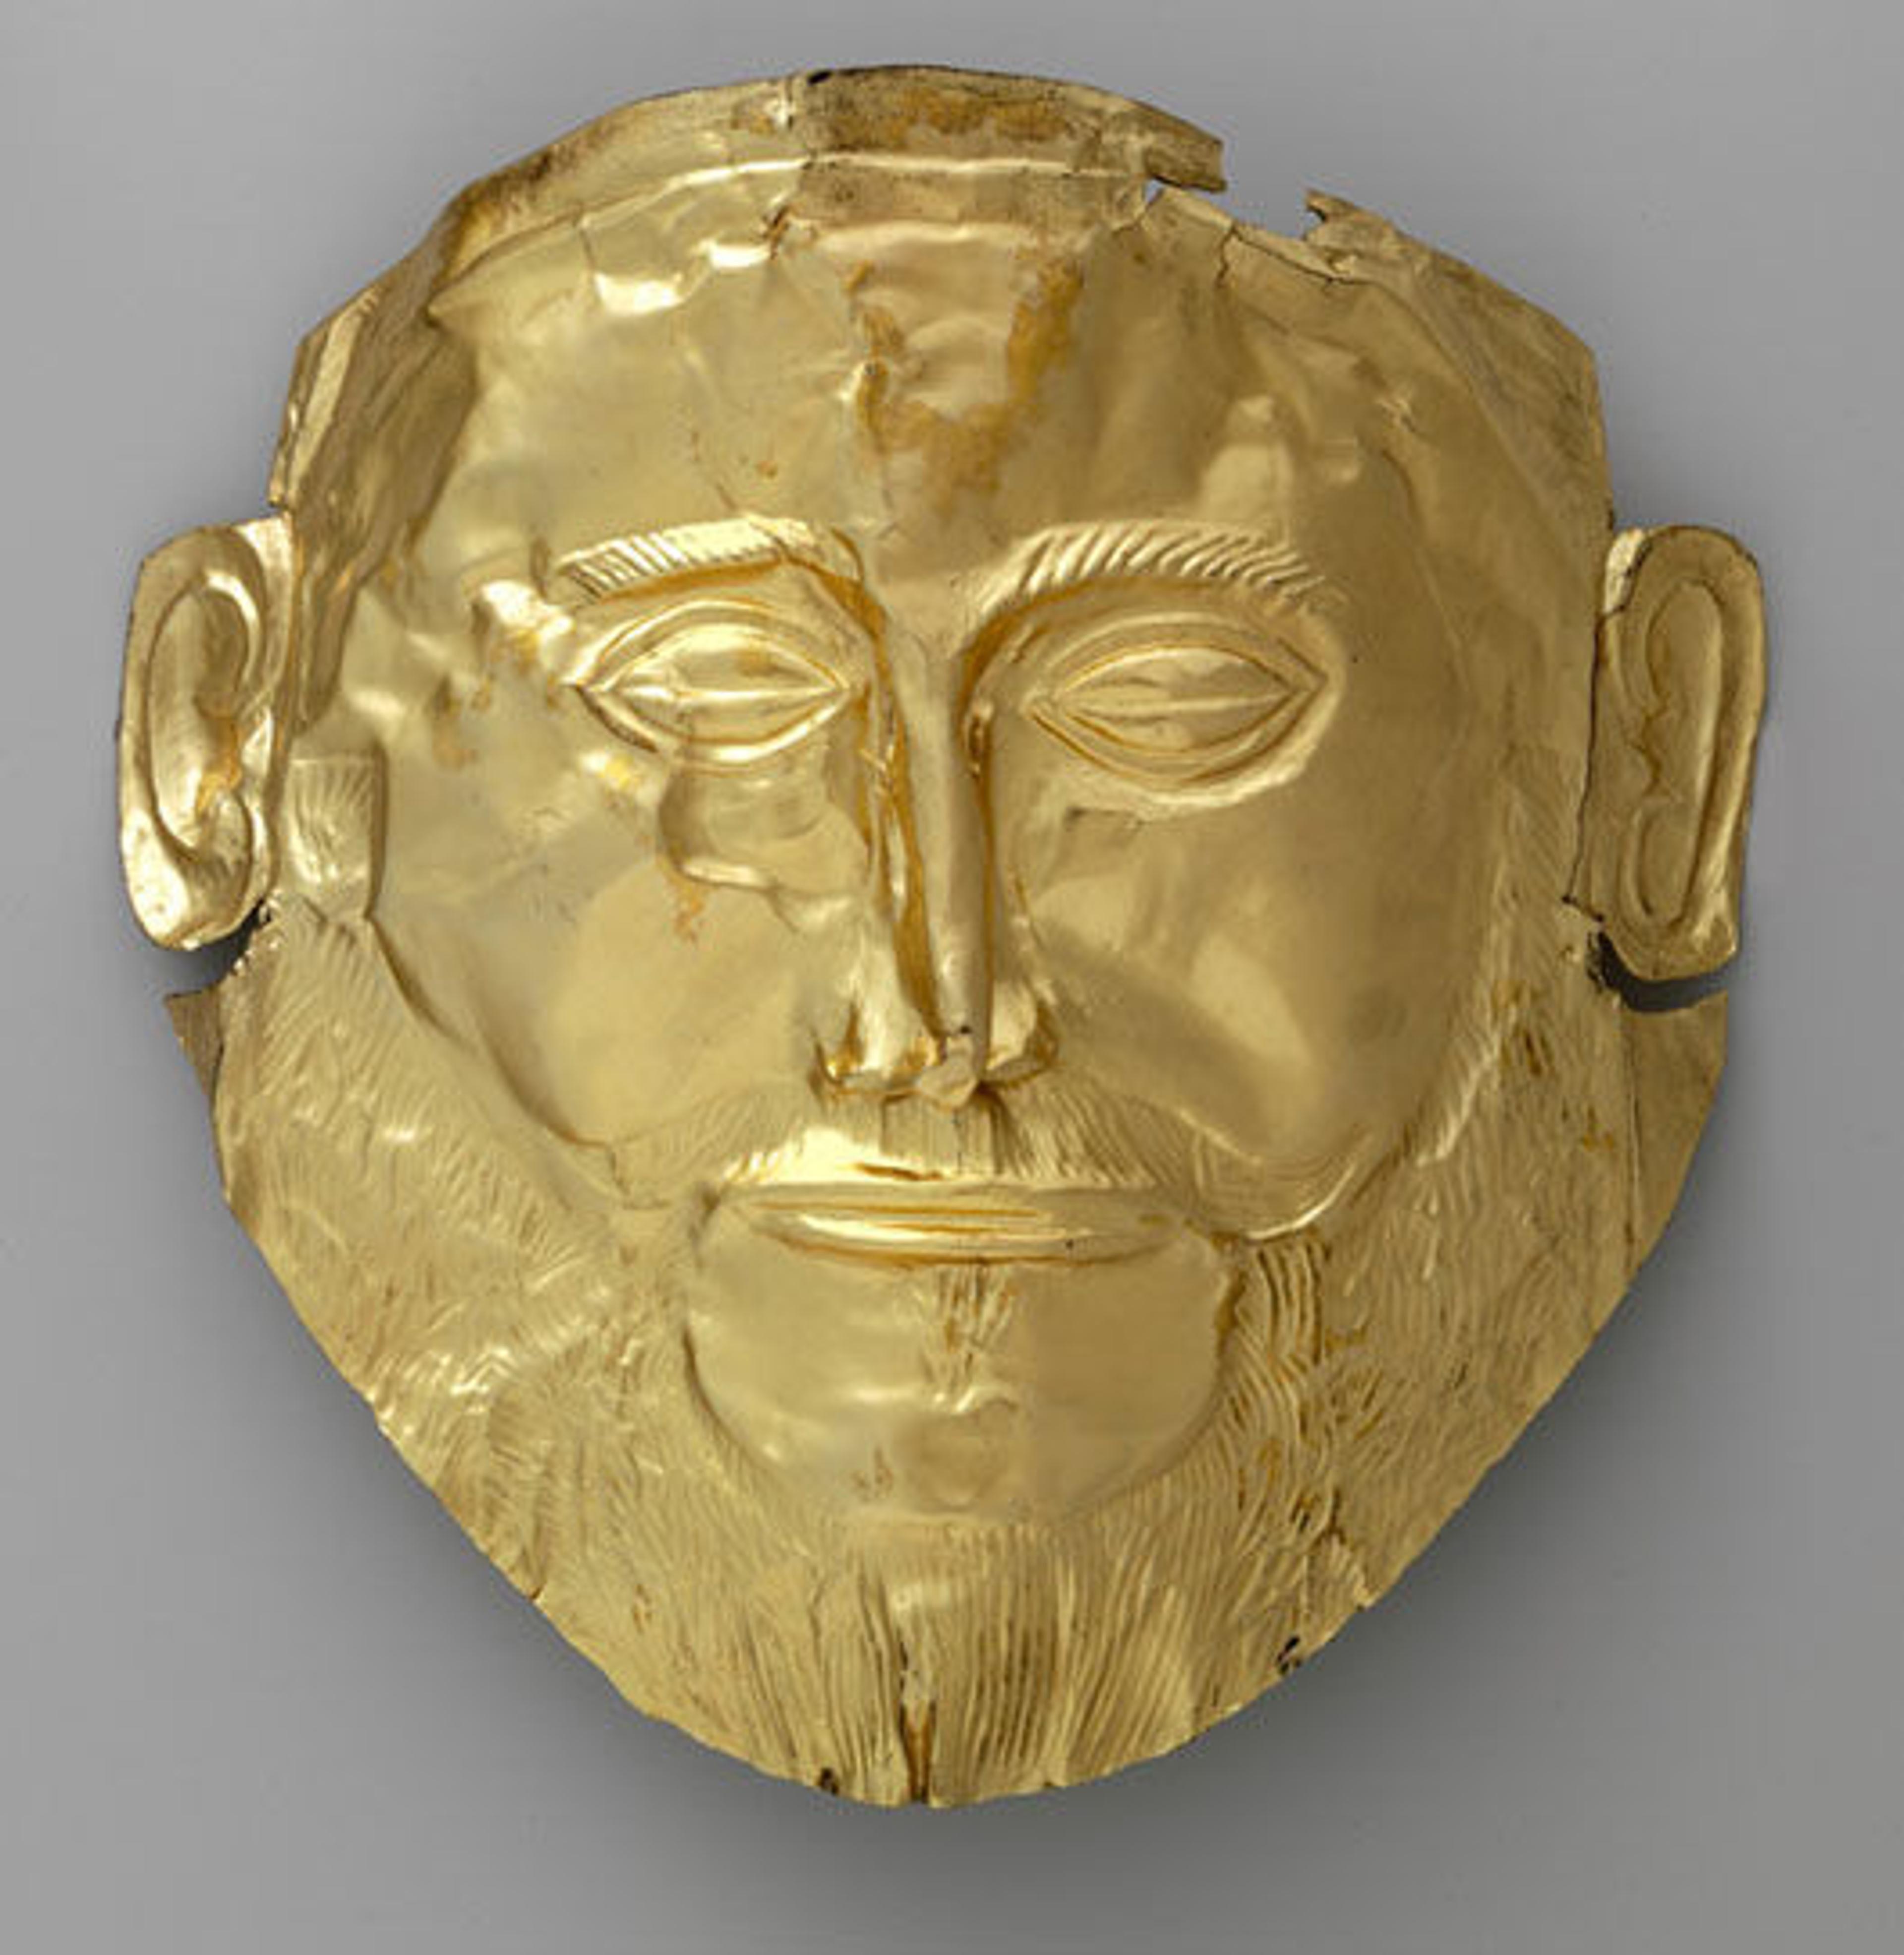 Greek Tragedy Mask (Illustration) - World History Encyclopedia